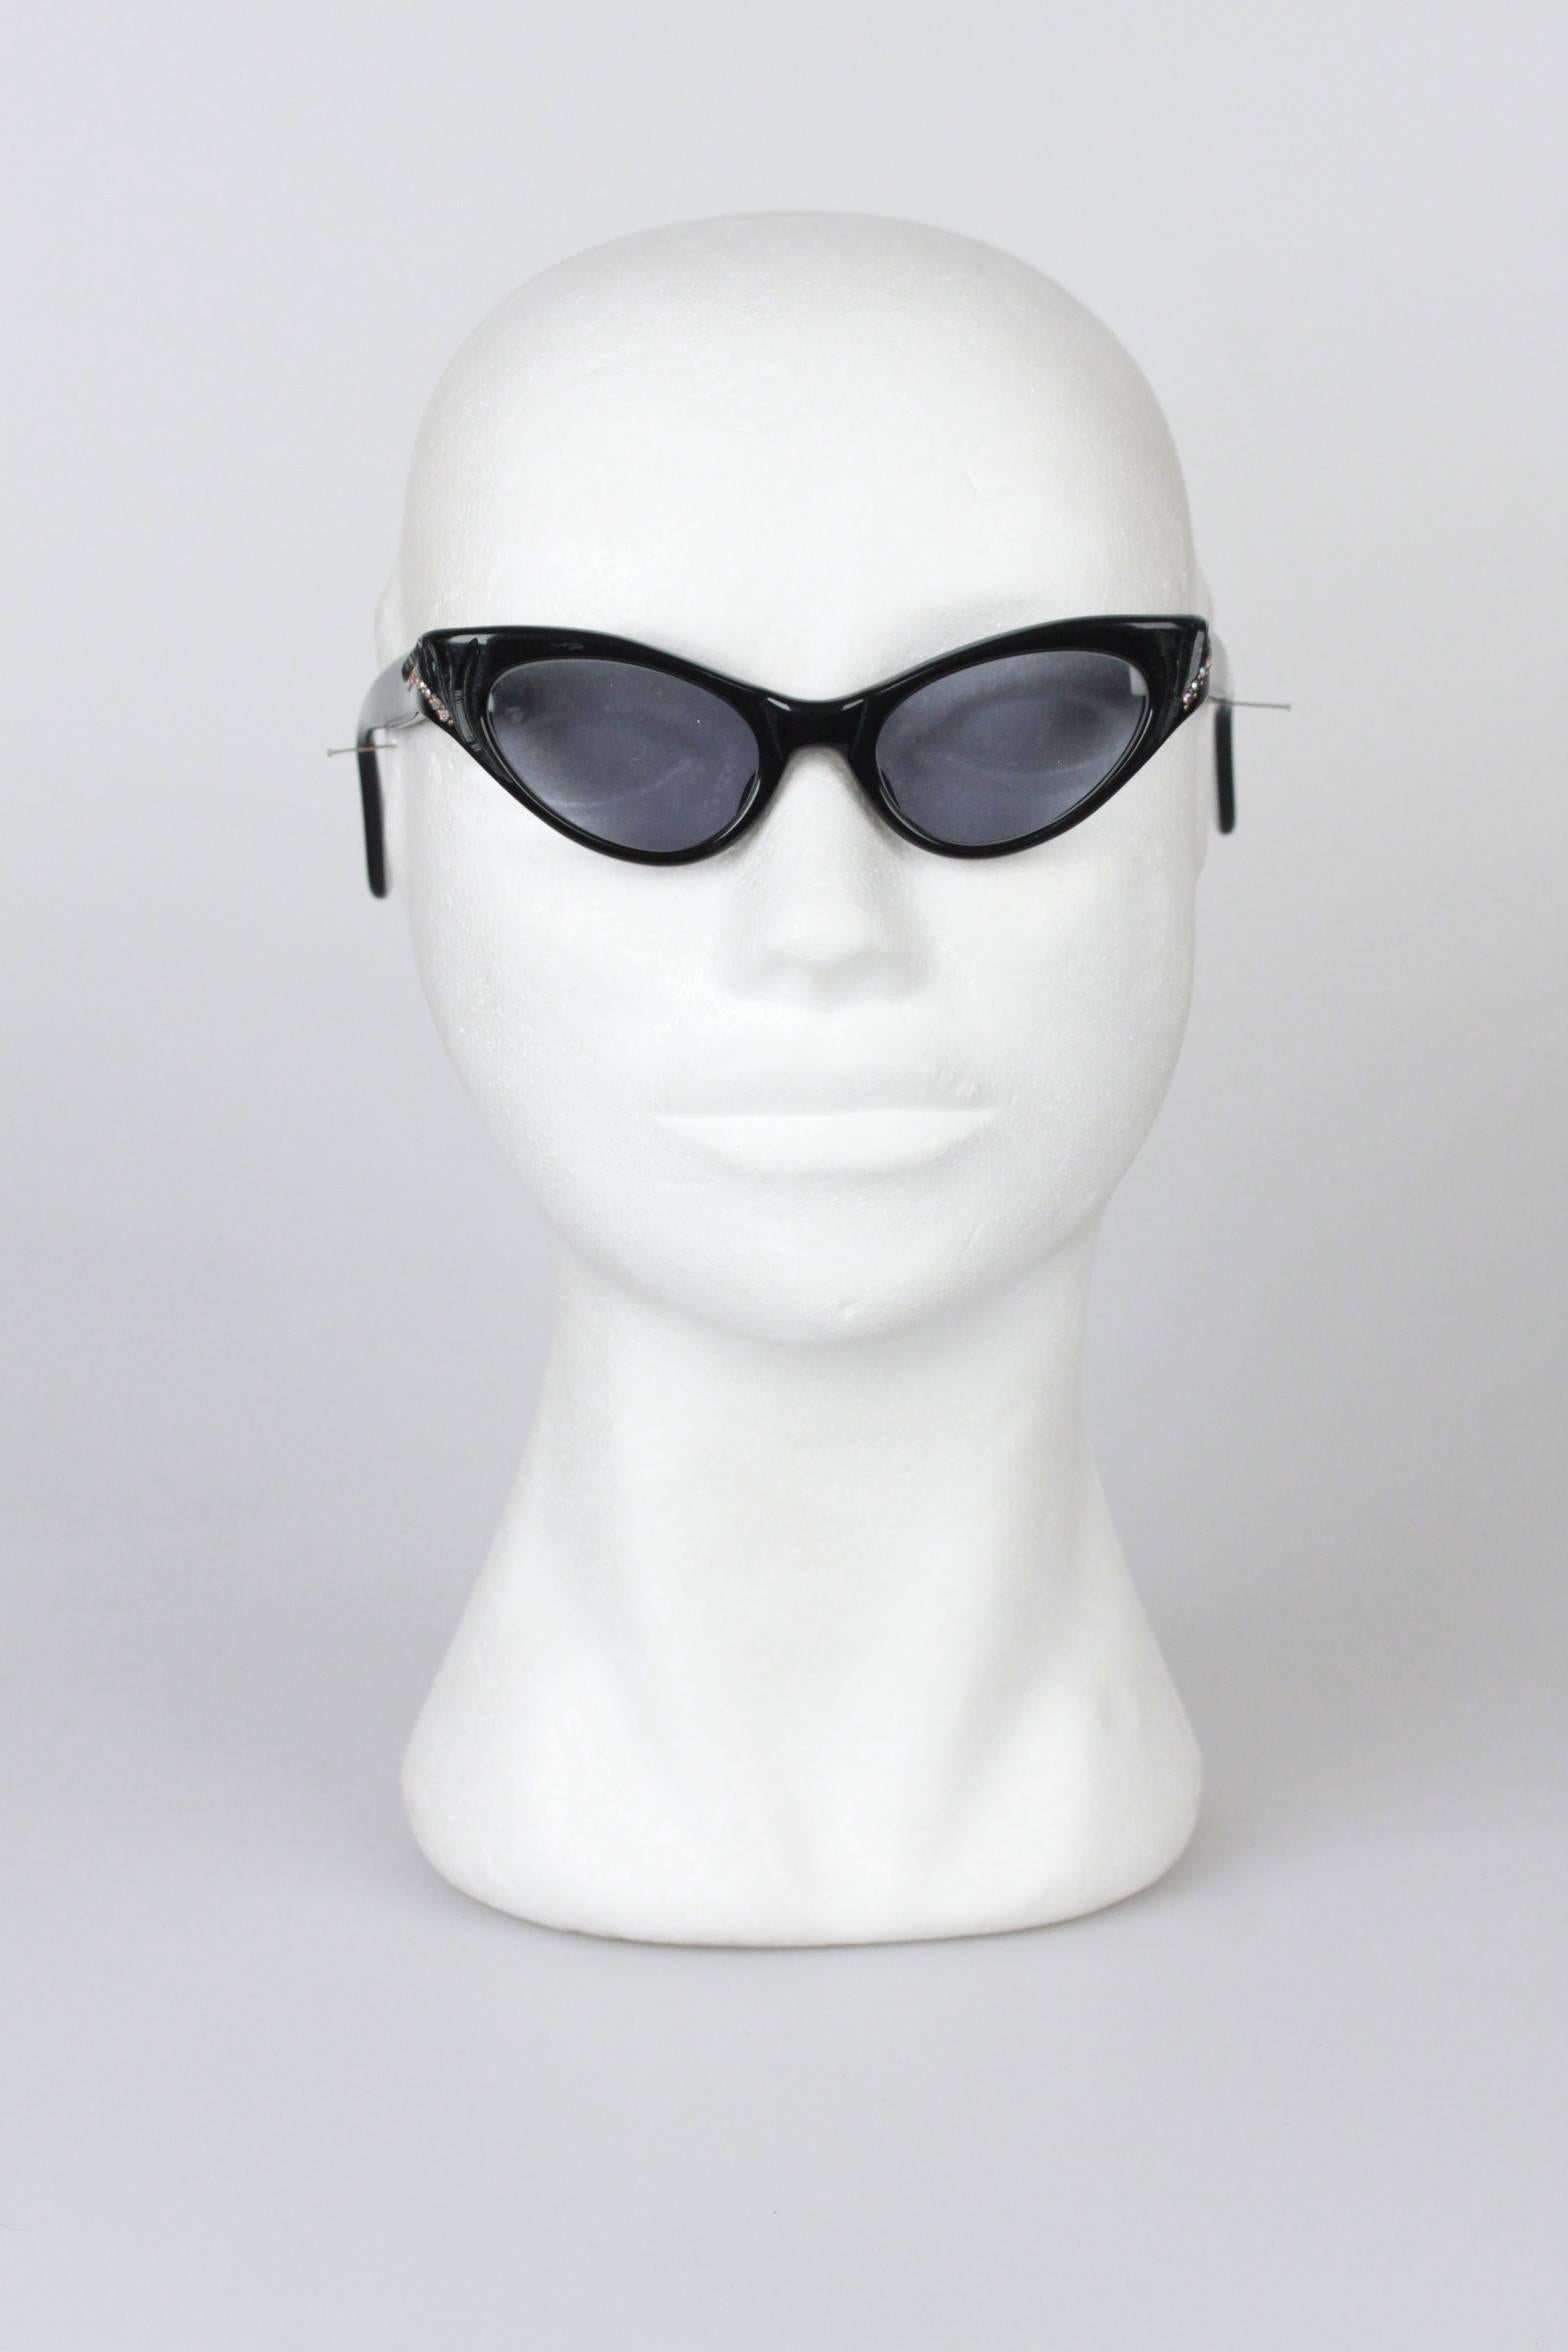 Vintage 1950s Cat-Eye Swank Sunglasses 4715 46/20 with Rhinestones 1